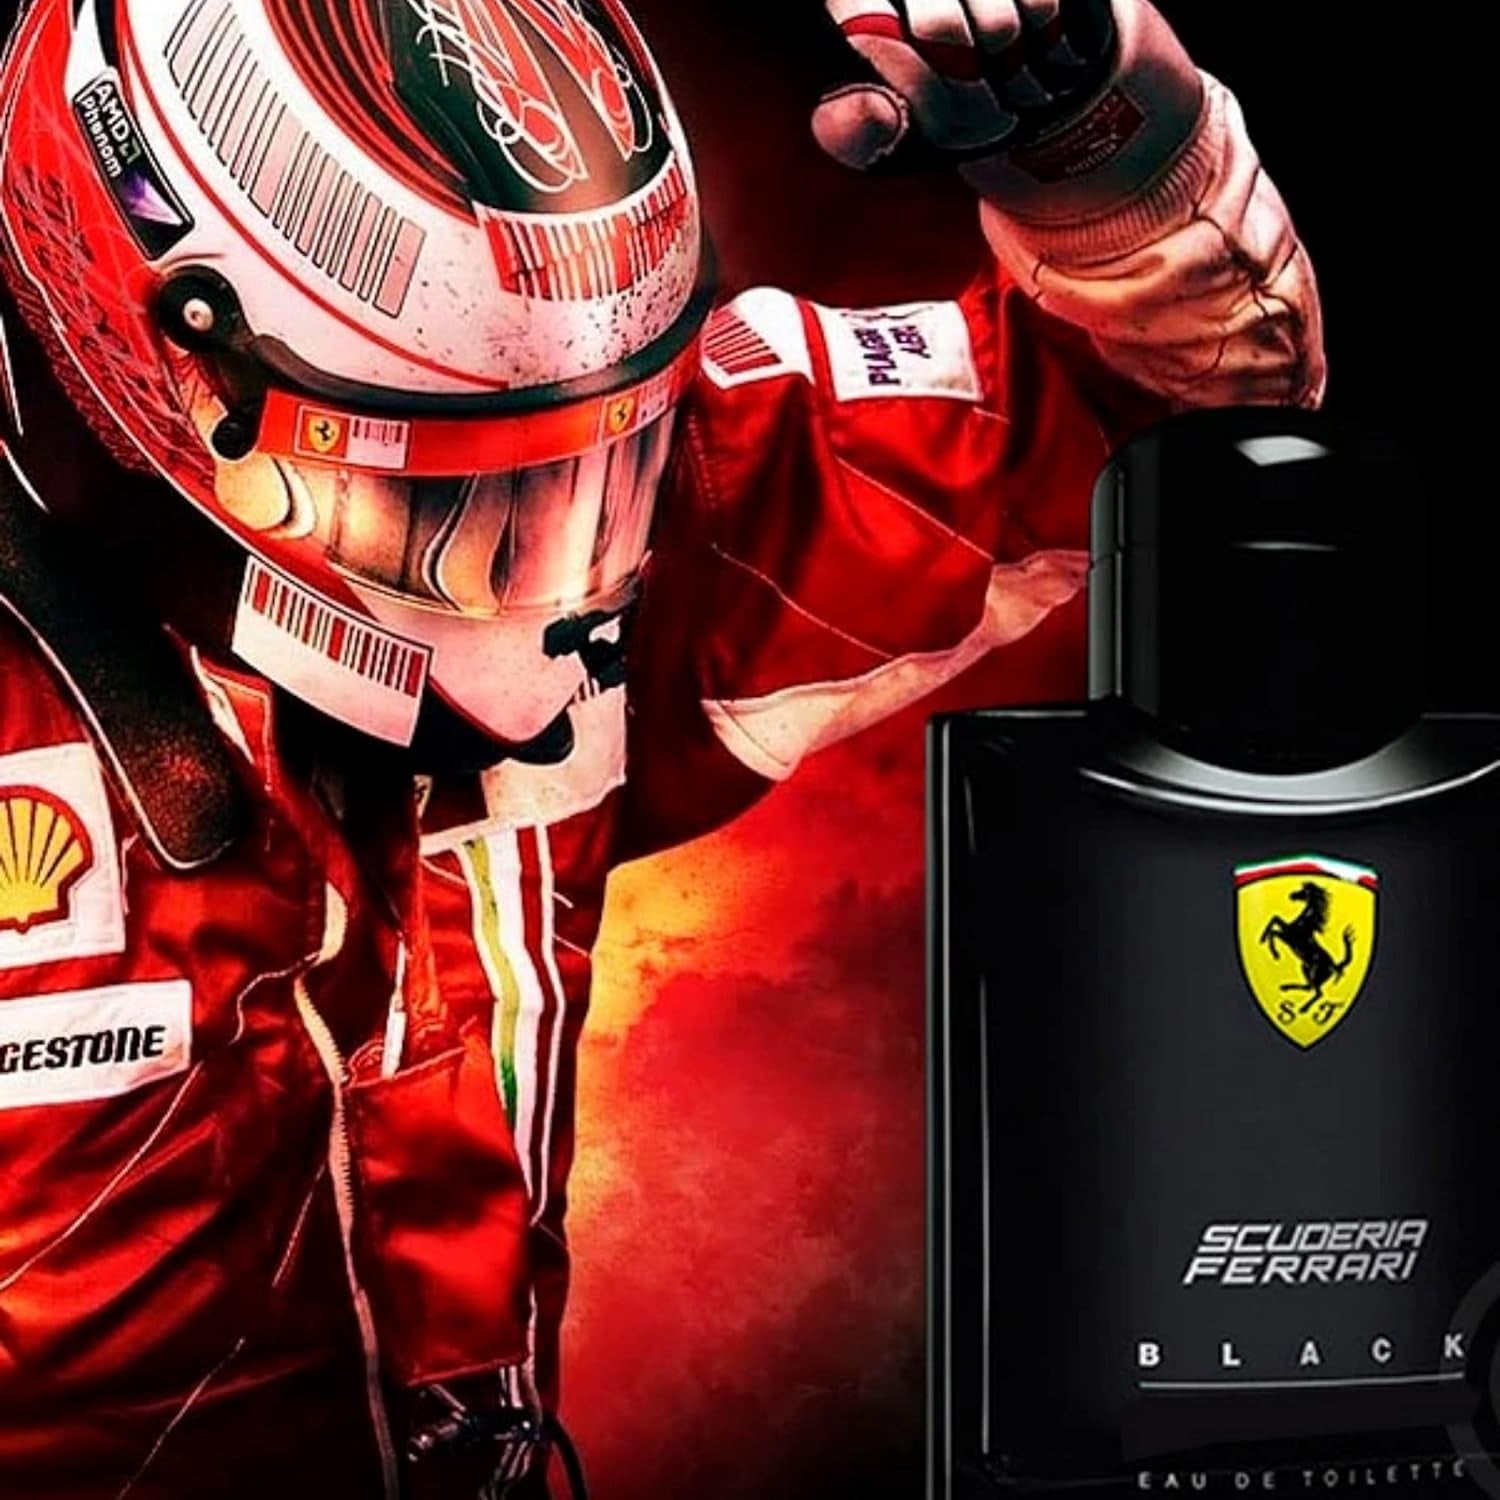 Ferrari Scuderia Black Eau De Toilette Spray for Men